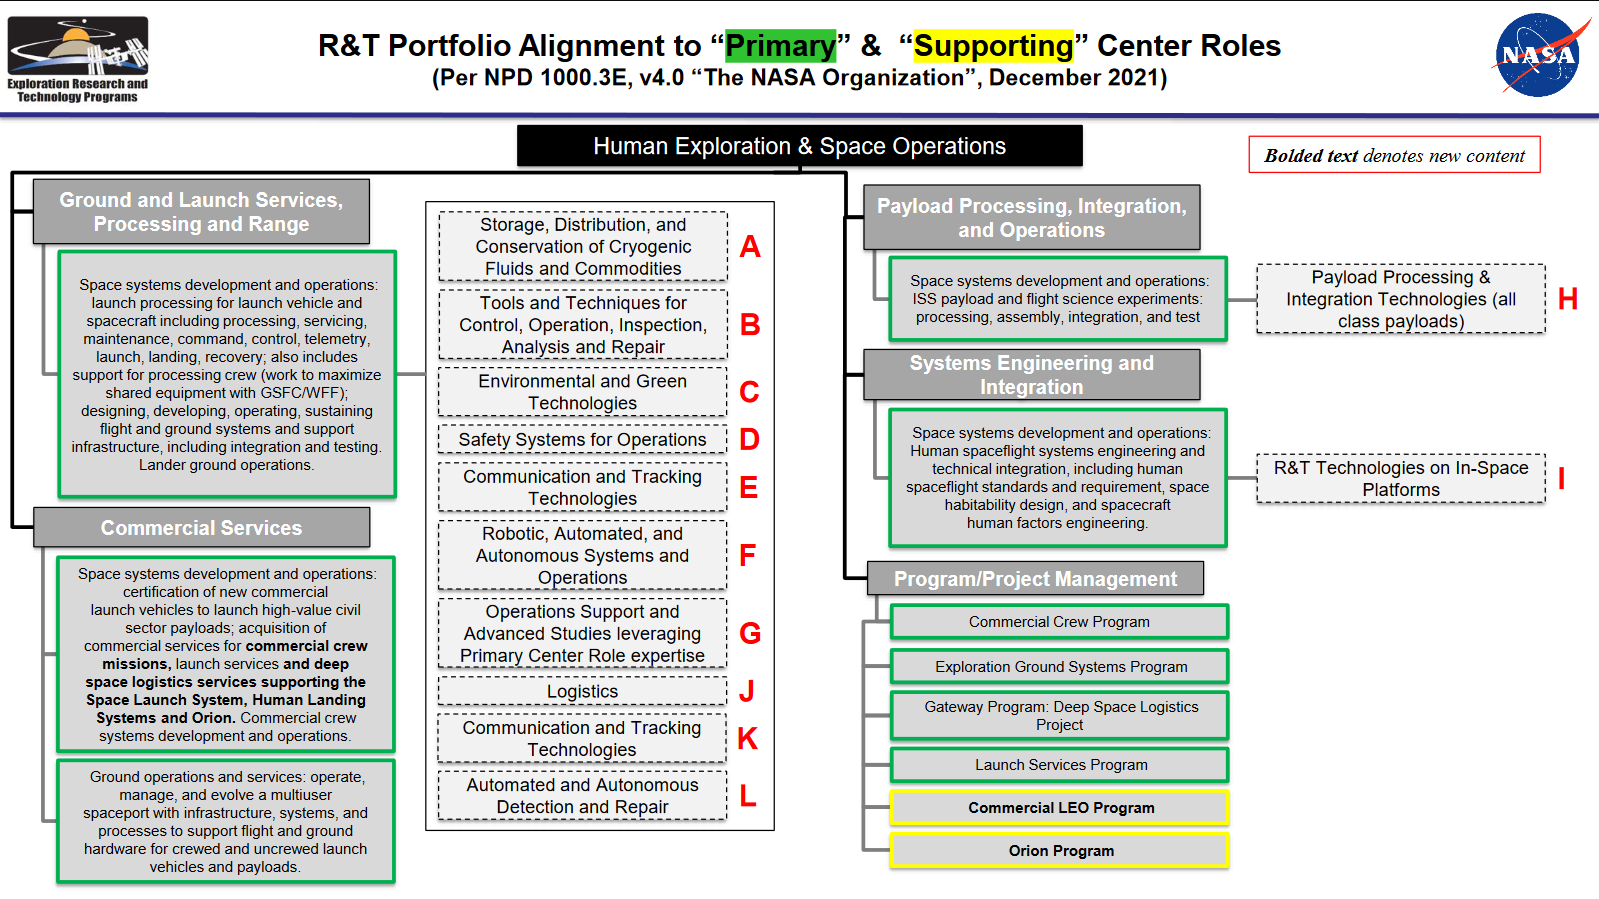 R&T Portfolio Alignment to “Primary” & “Supporting” Center Roles